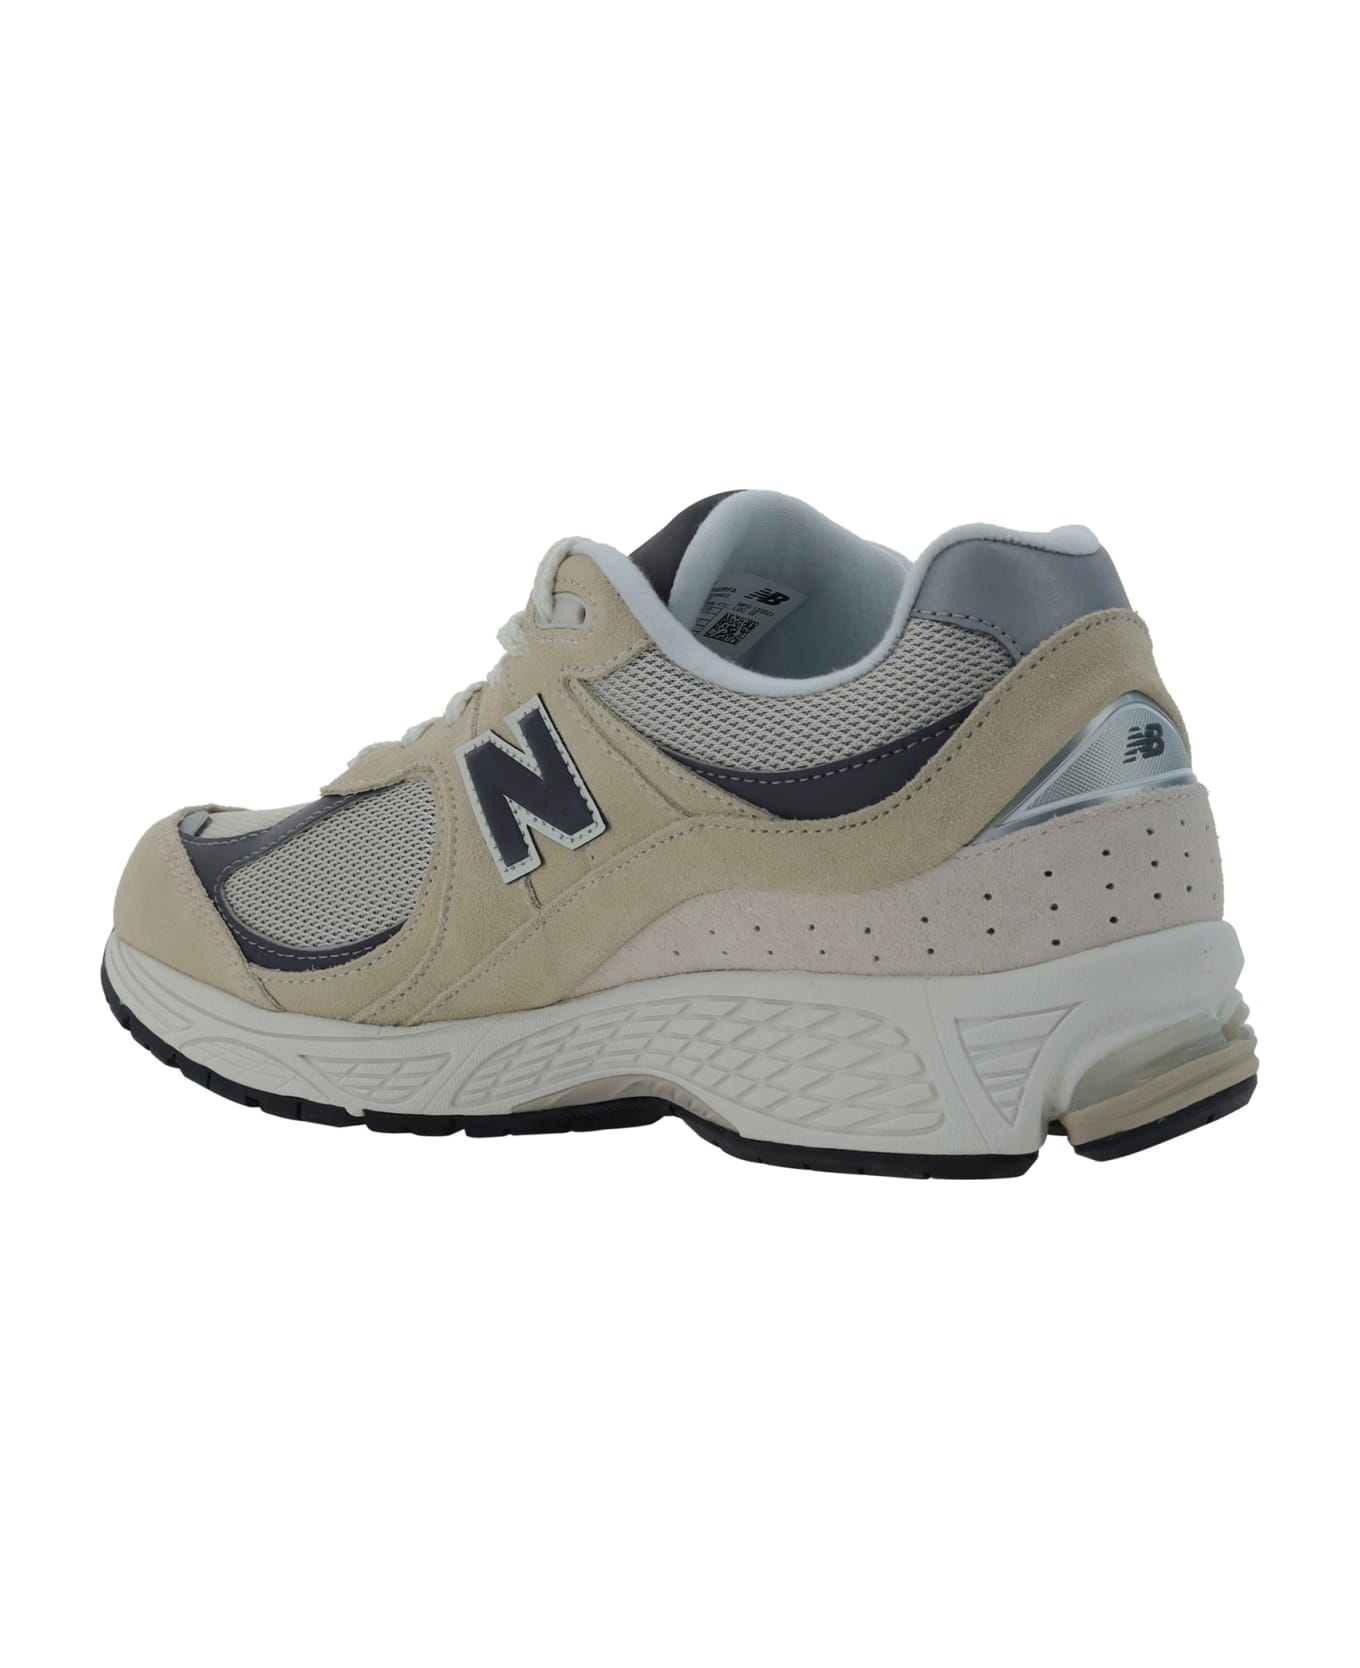 New Balance Sneakers - Sandstone